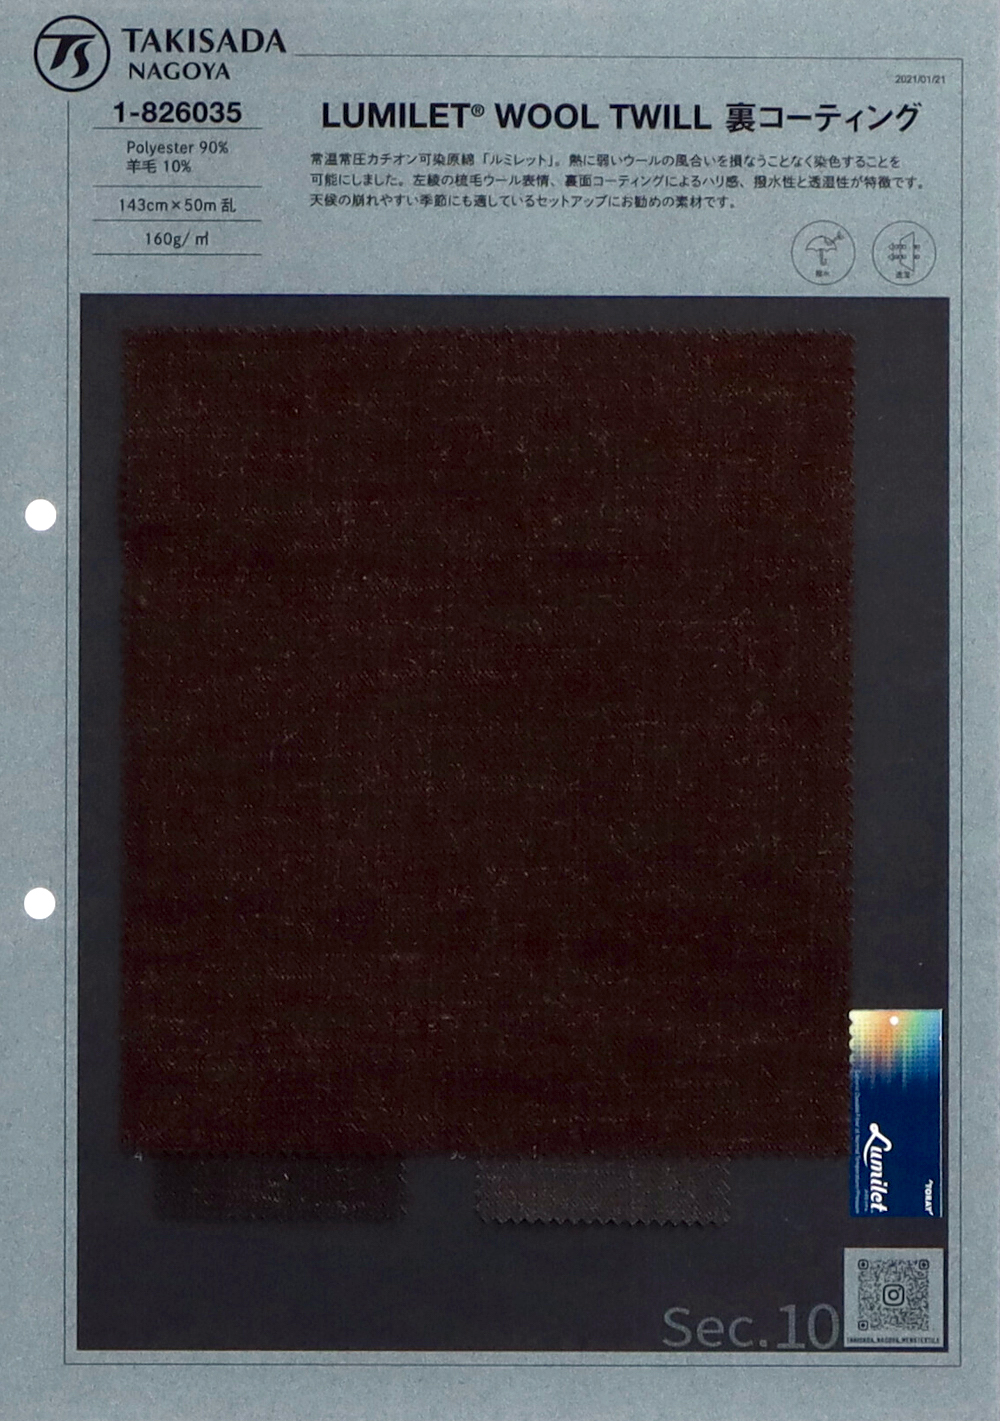 101-826035 LUMILET® WOOL TWILL Back Coating[Textile / Fabric] Takisada Nagoya